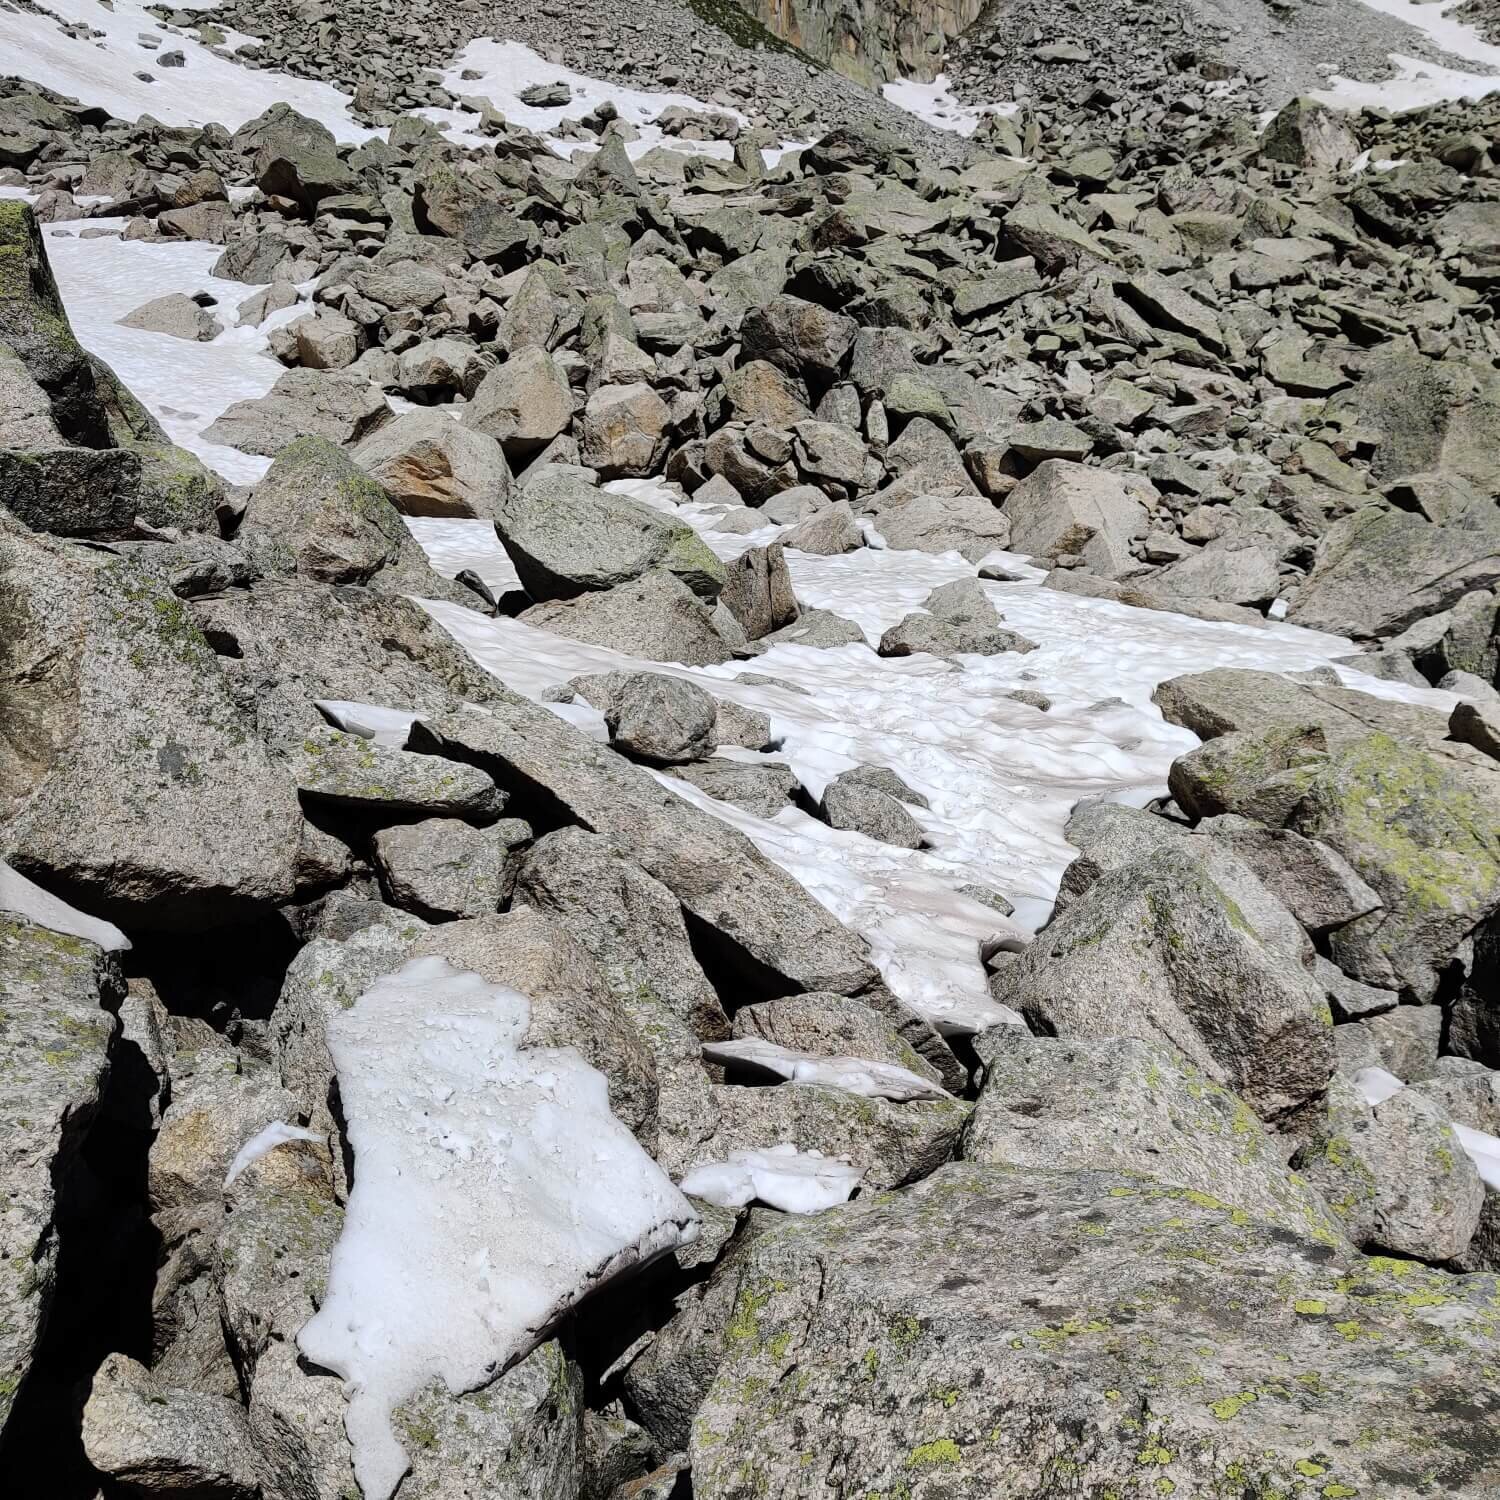 Rocky boulder crossing on descent from Fenetre D'Arpette